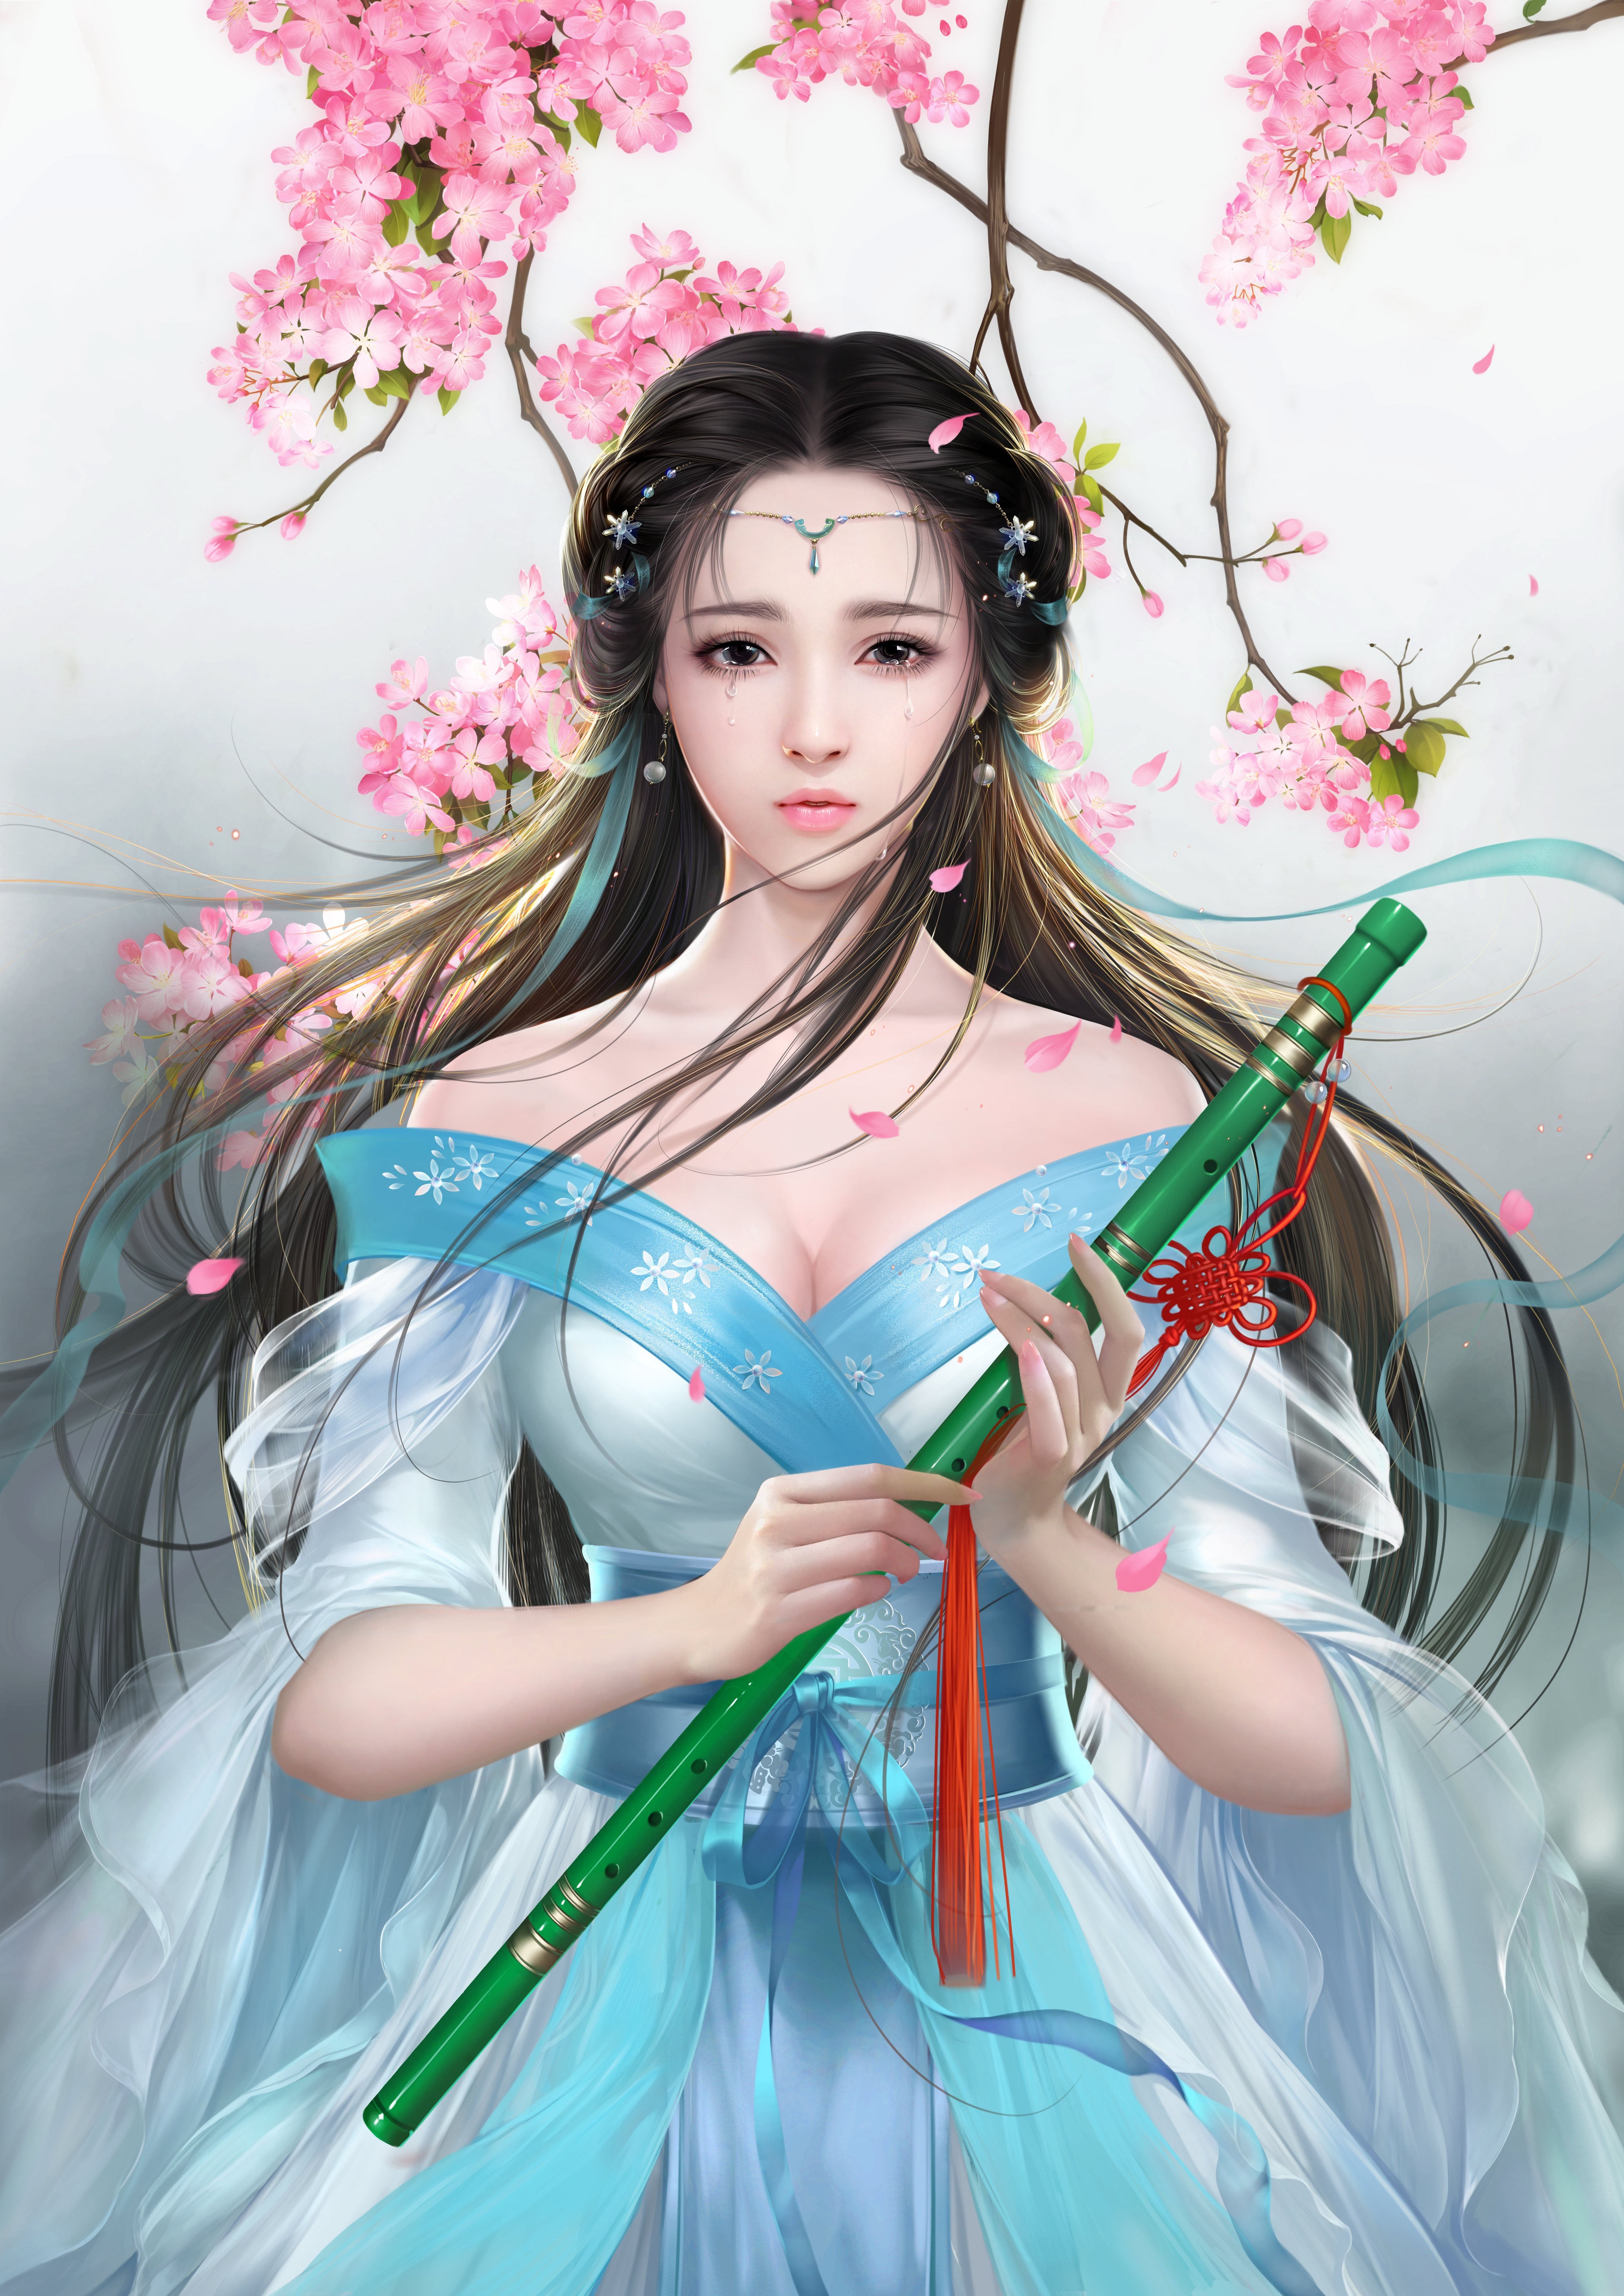 Anime 3976x5622 ancient fantasy girl artwork flute pink flowers dress cyan clothing brunette drawing tears